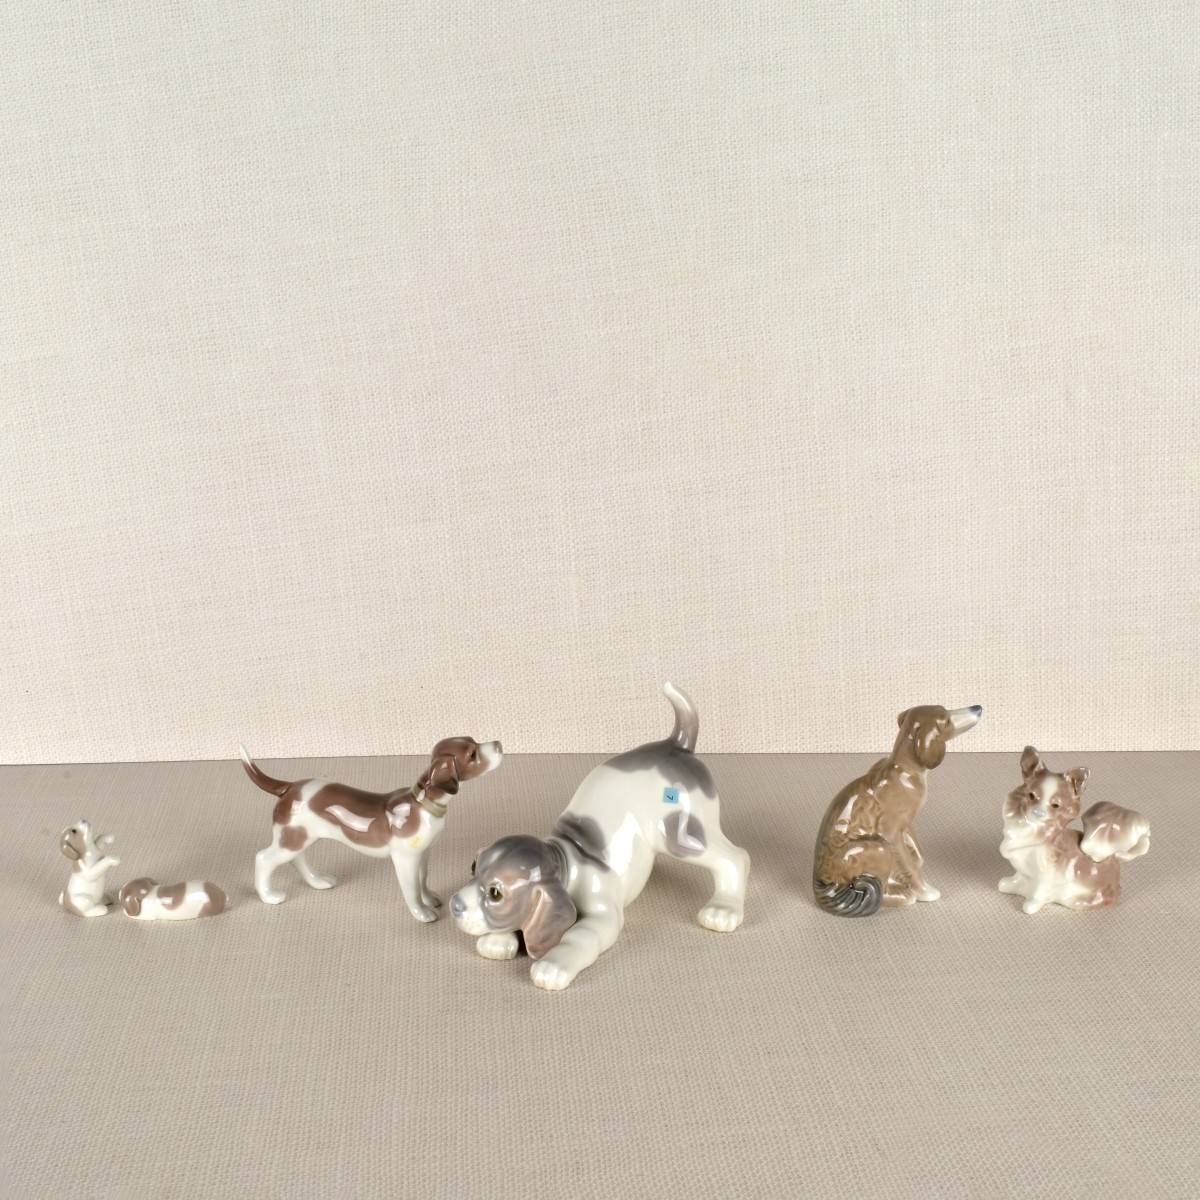 Six Lladro Porcelain Dog Figurines